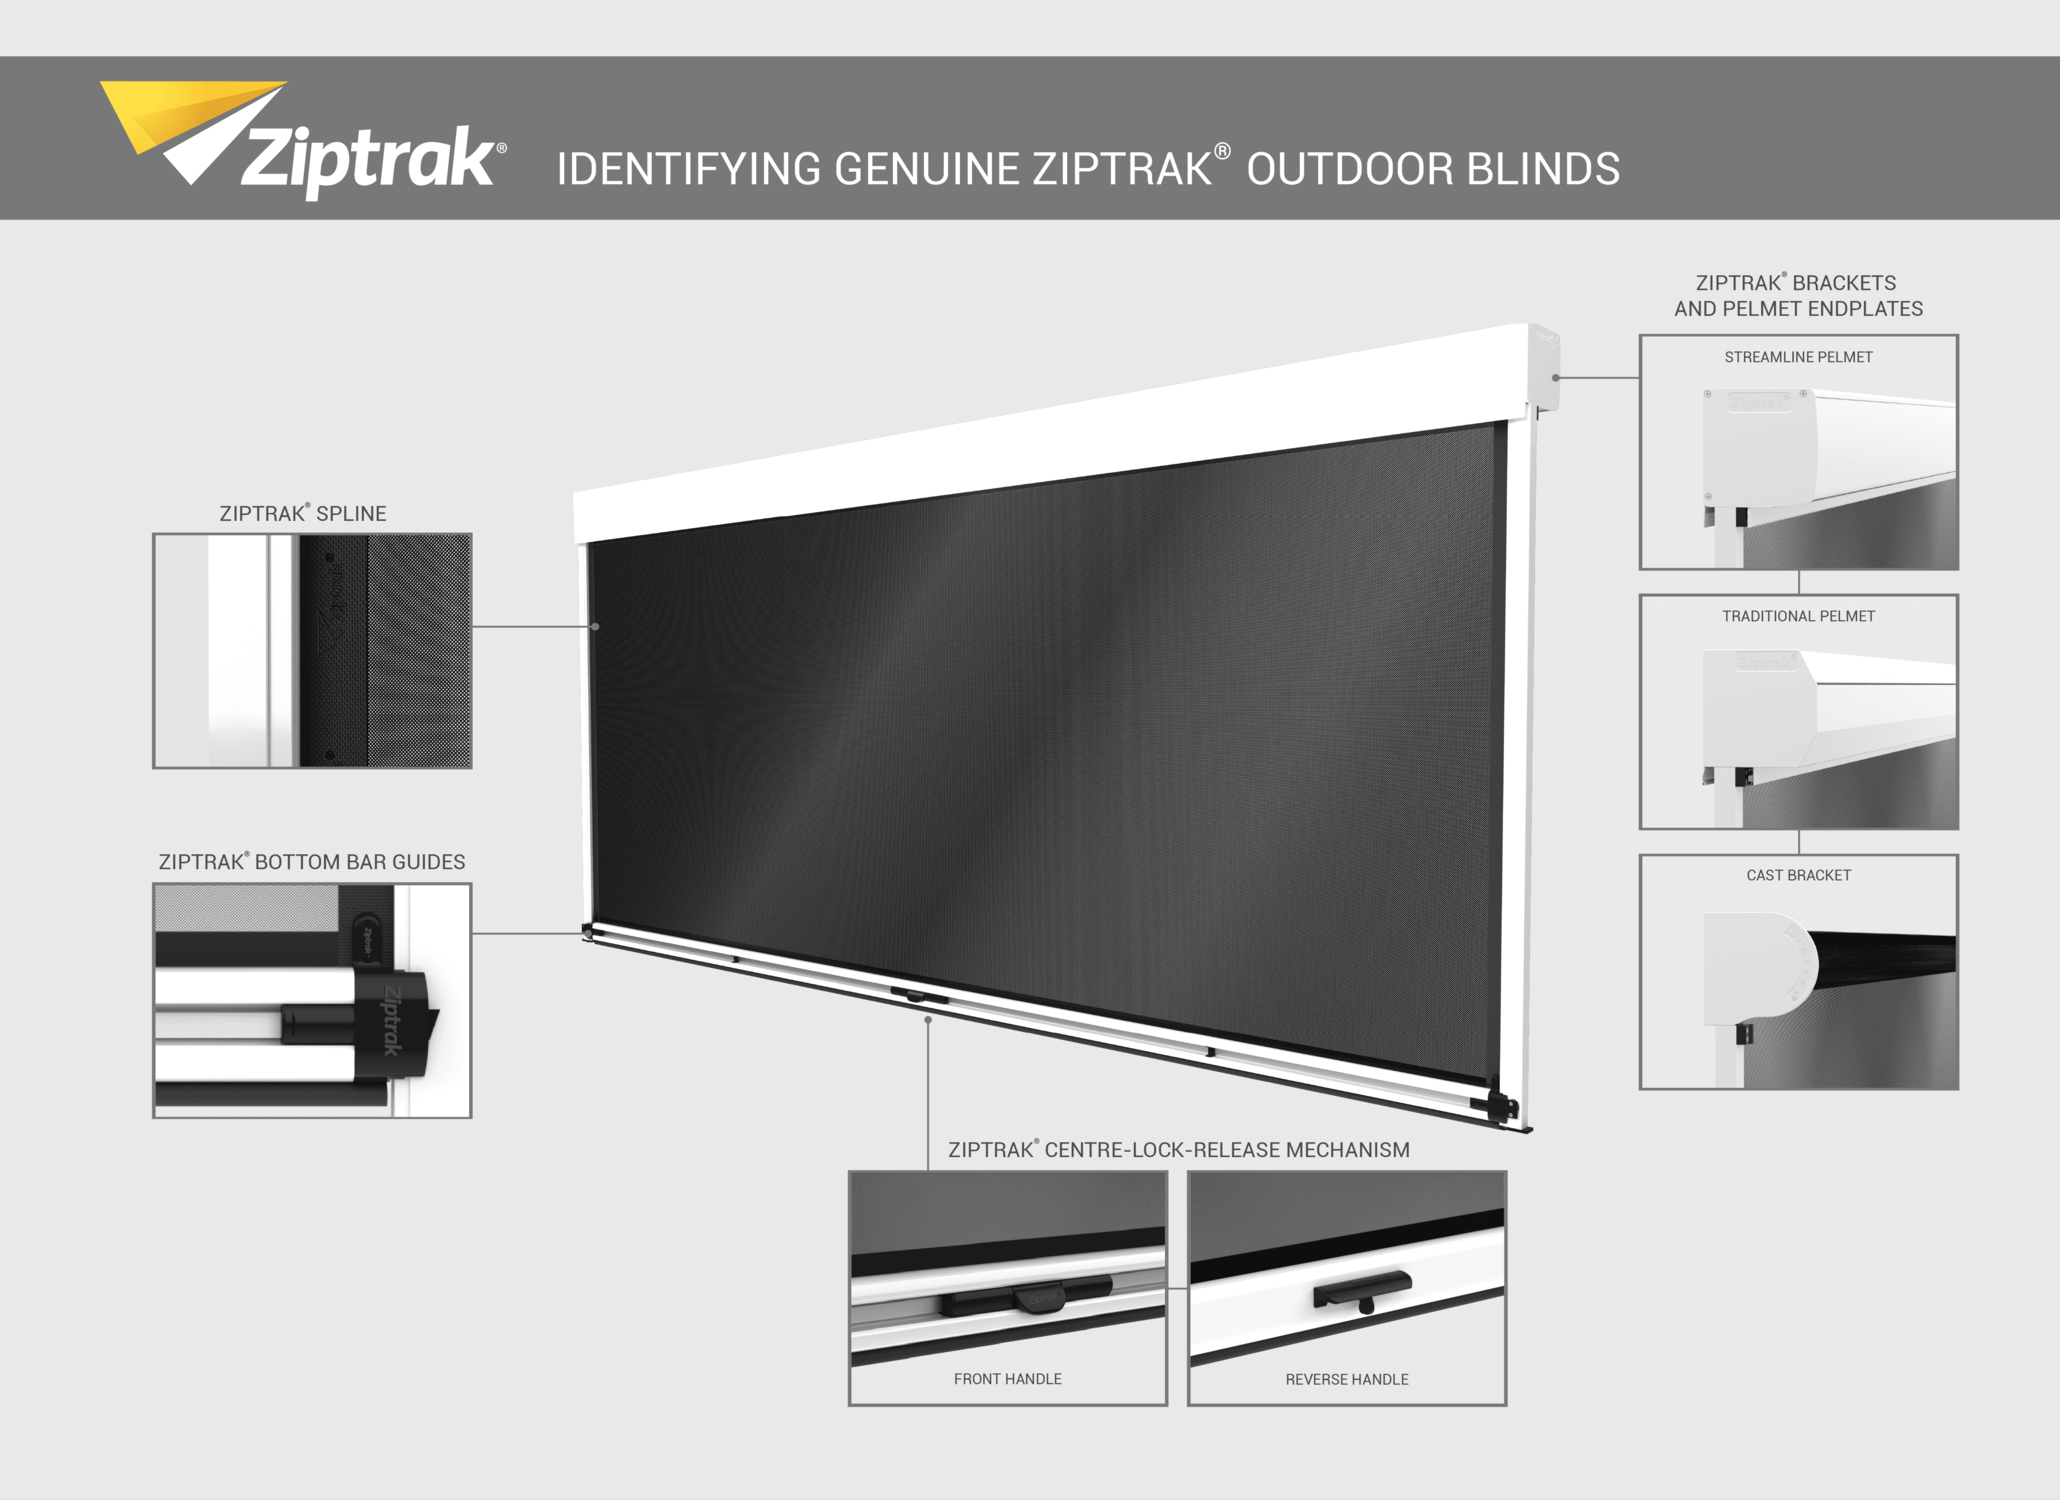 How to identify a Genuine Ziptrak® Outdoor Blind